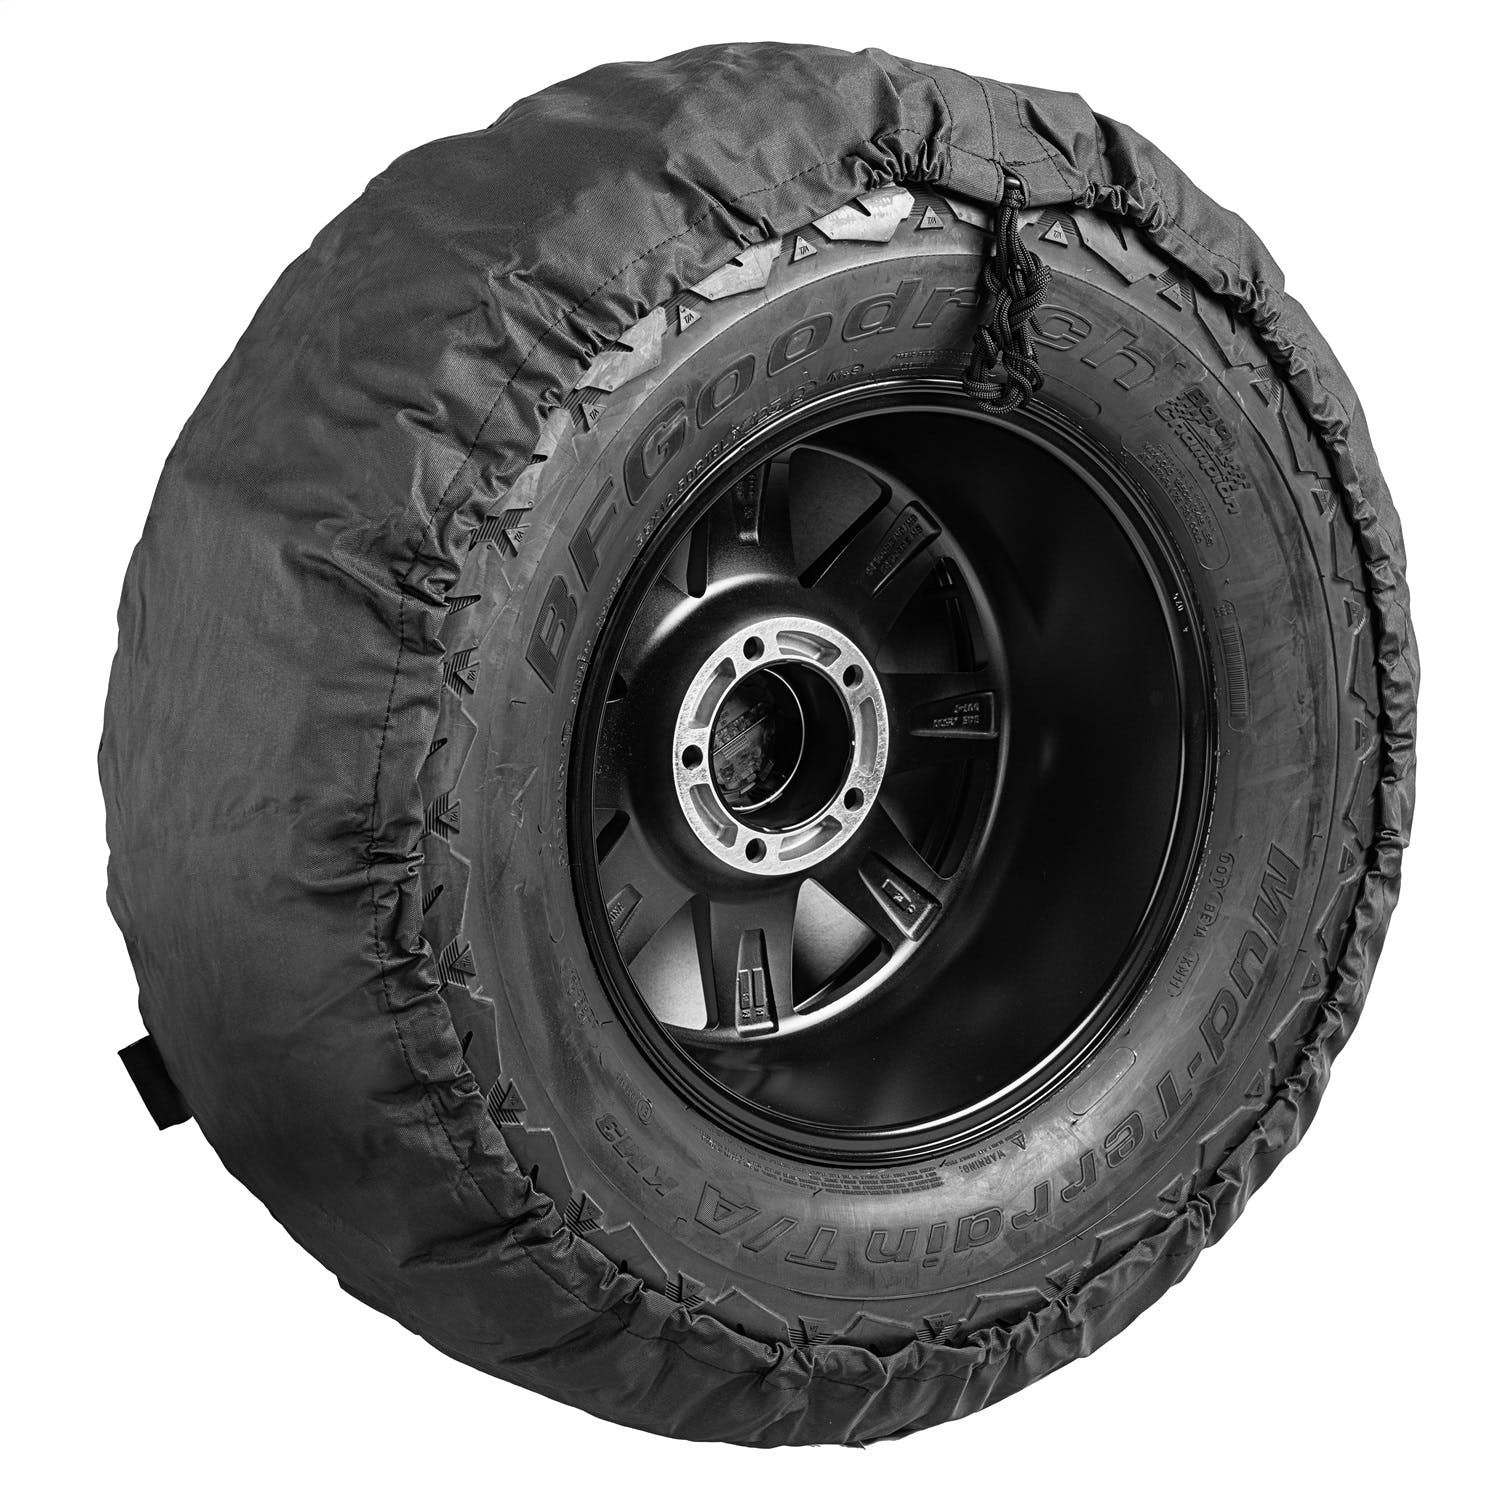 Rugged Ridge 12803.36 33-35 In Tire Cover, Black Diamond, Universal Fit